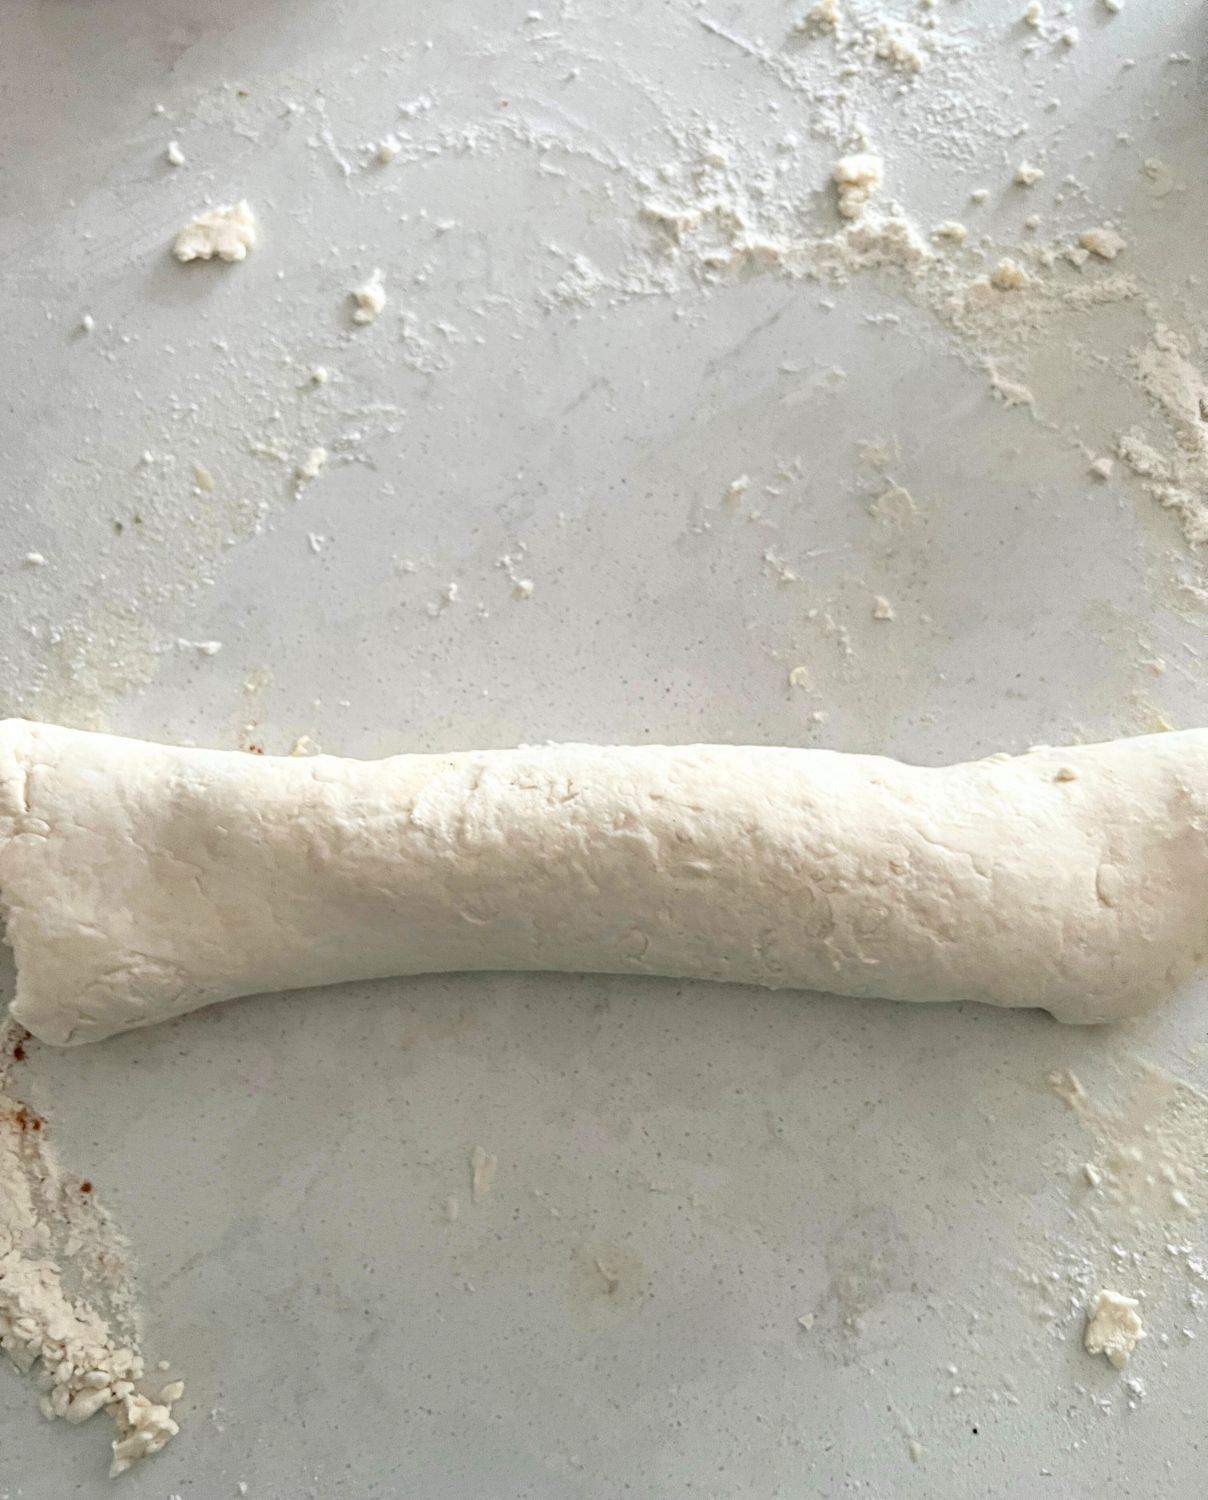 Cinnamon roll dough rolled up into a long retangular shape. 